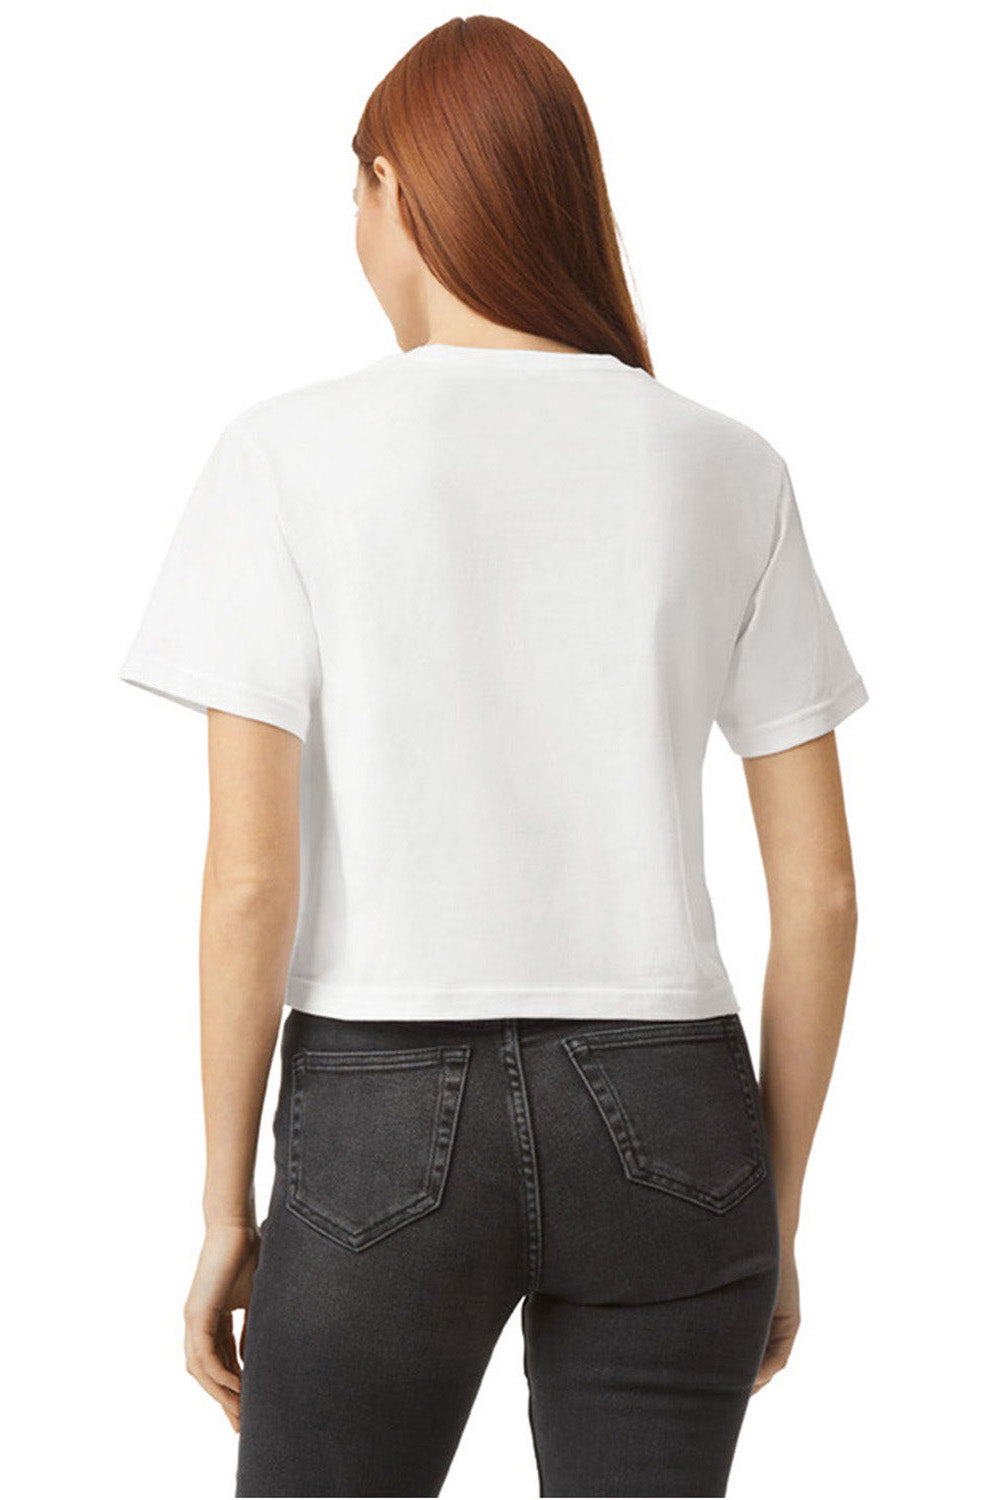 American Apparel 102AM Womens Fine Jersey Boxy Short Sleeve Crewneck T-Shirt White Model Back